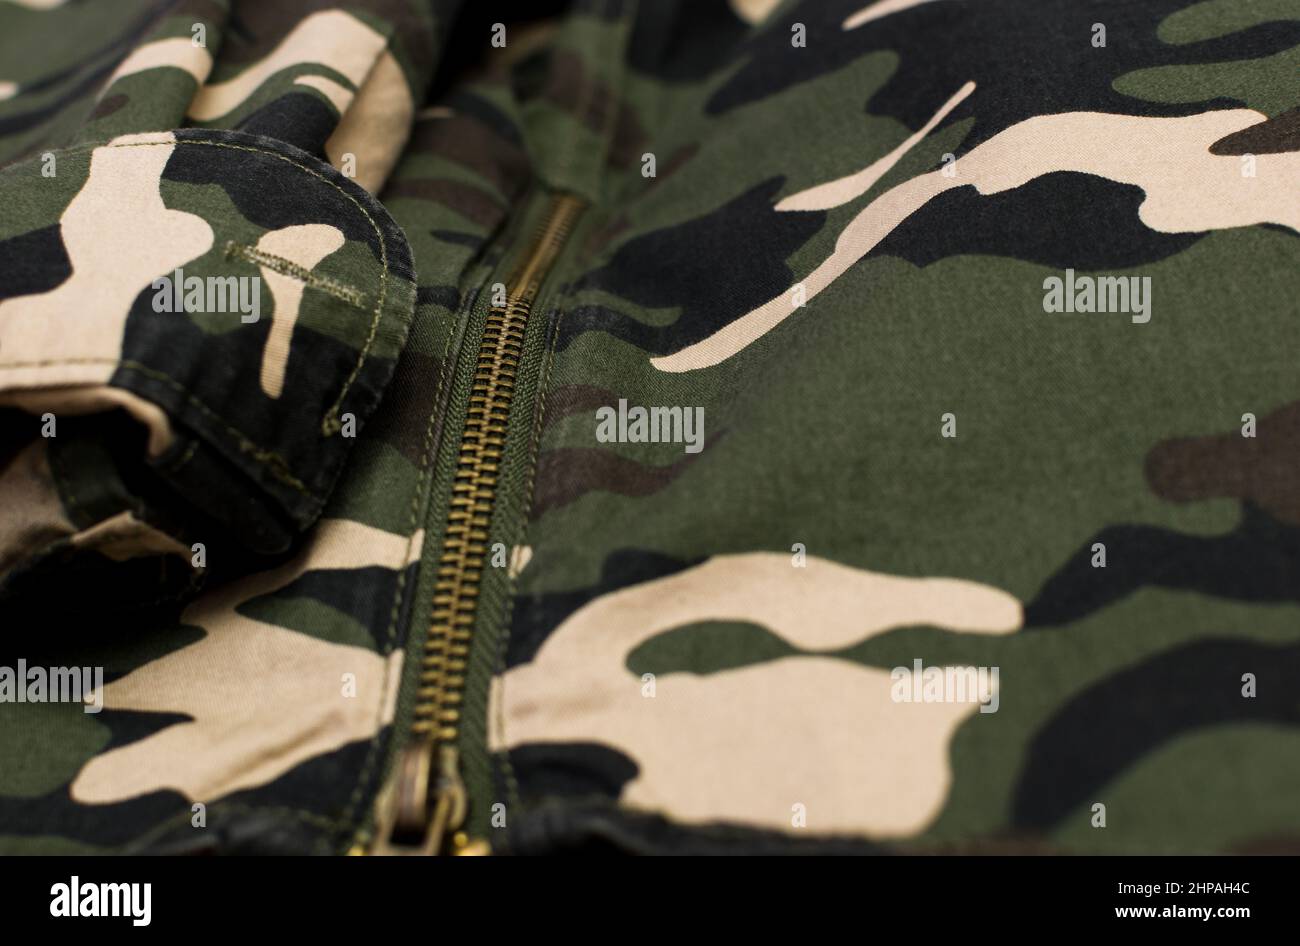 Military camouflage uniform, close up Stock Photo